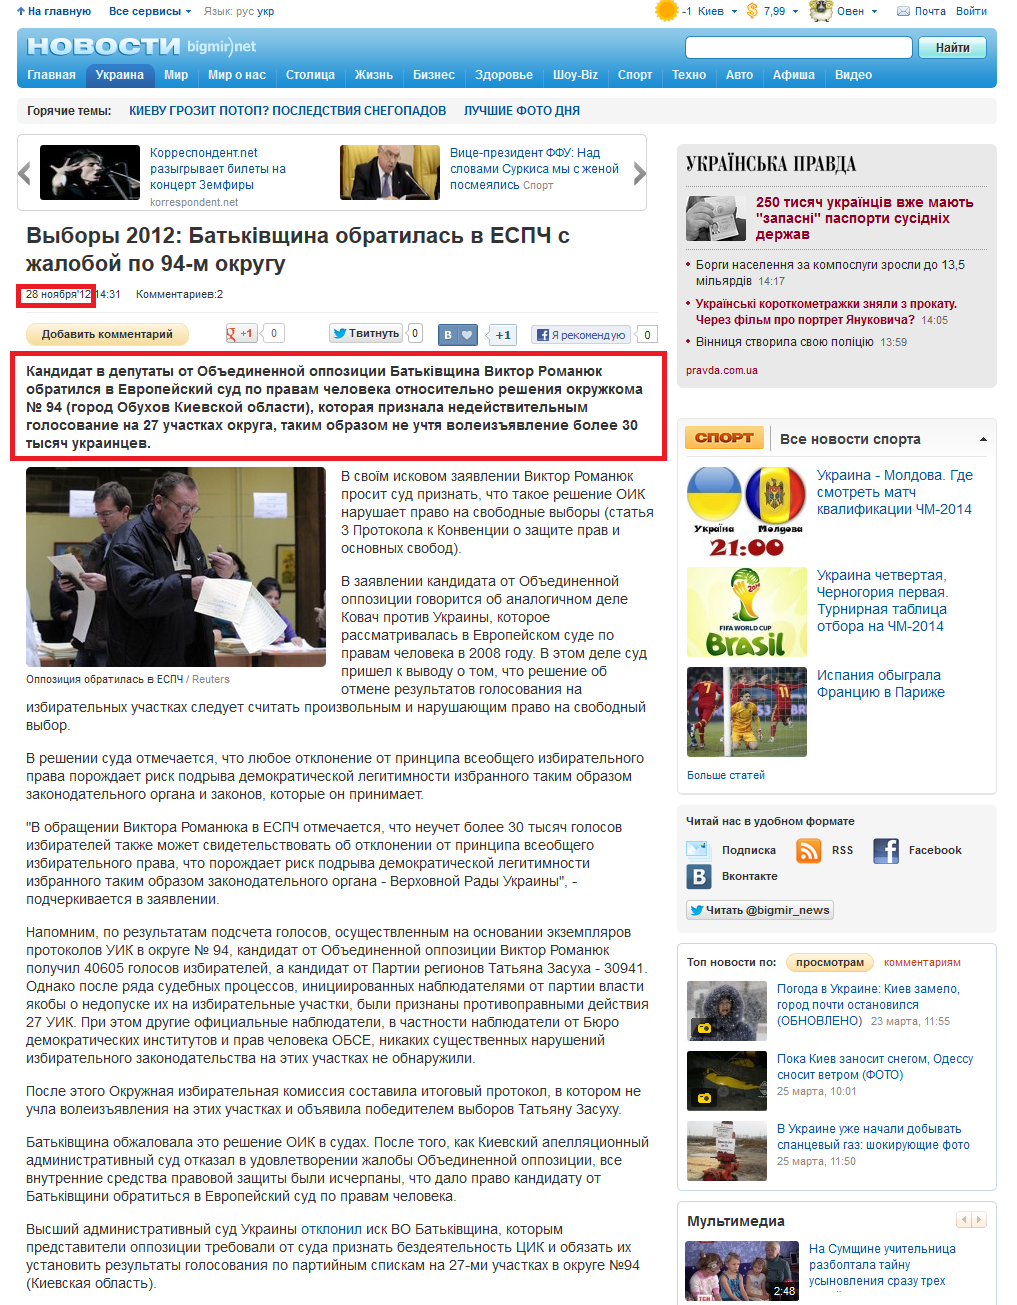 http://news.bigmir.net/ukraine/643883-Vibori-2012-Batkivshina-obratilas-v-ESPCh-s-jaloboi-po-94-m-okrygy